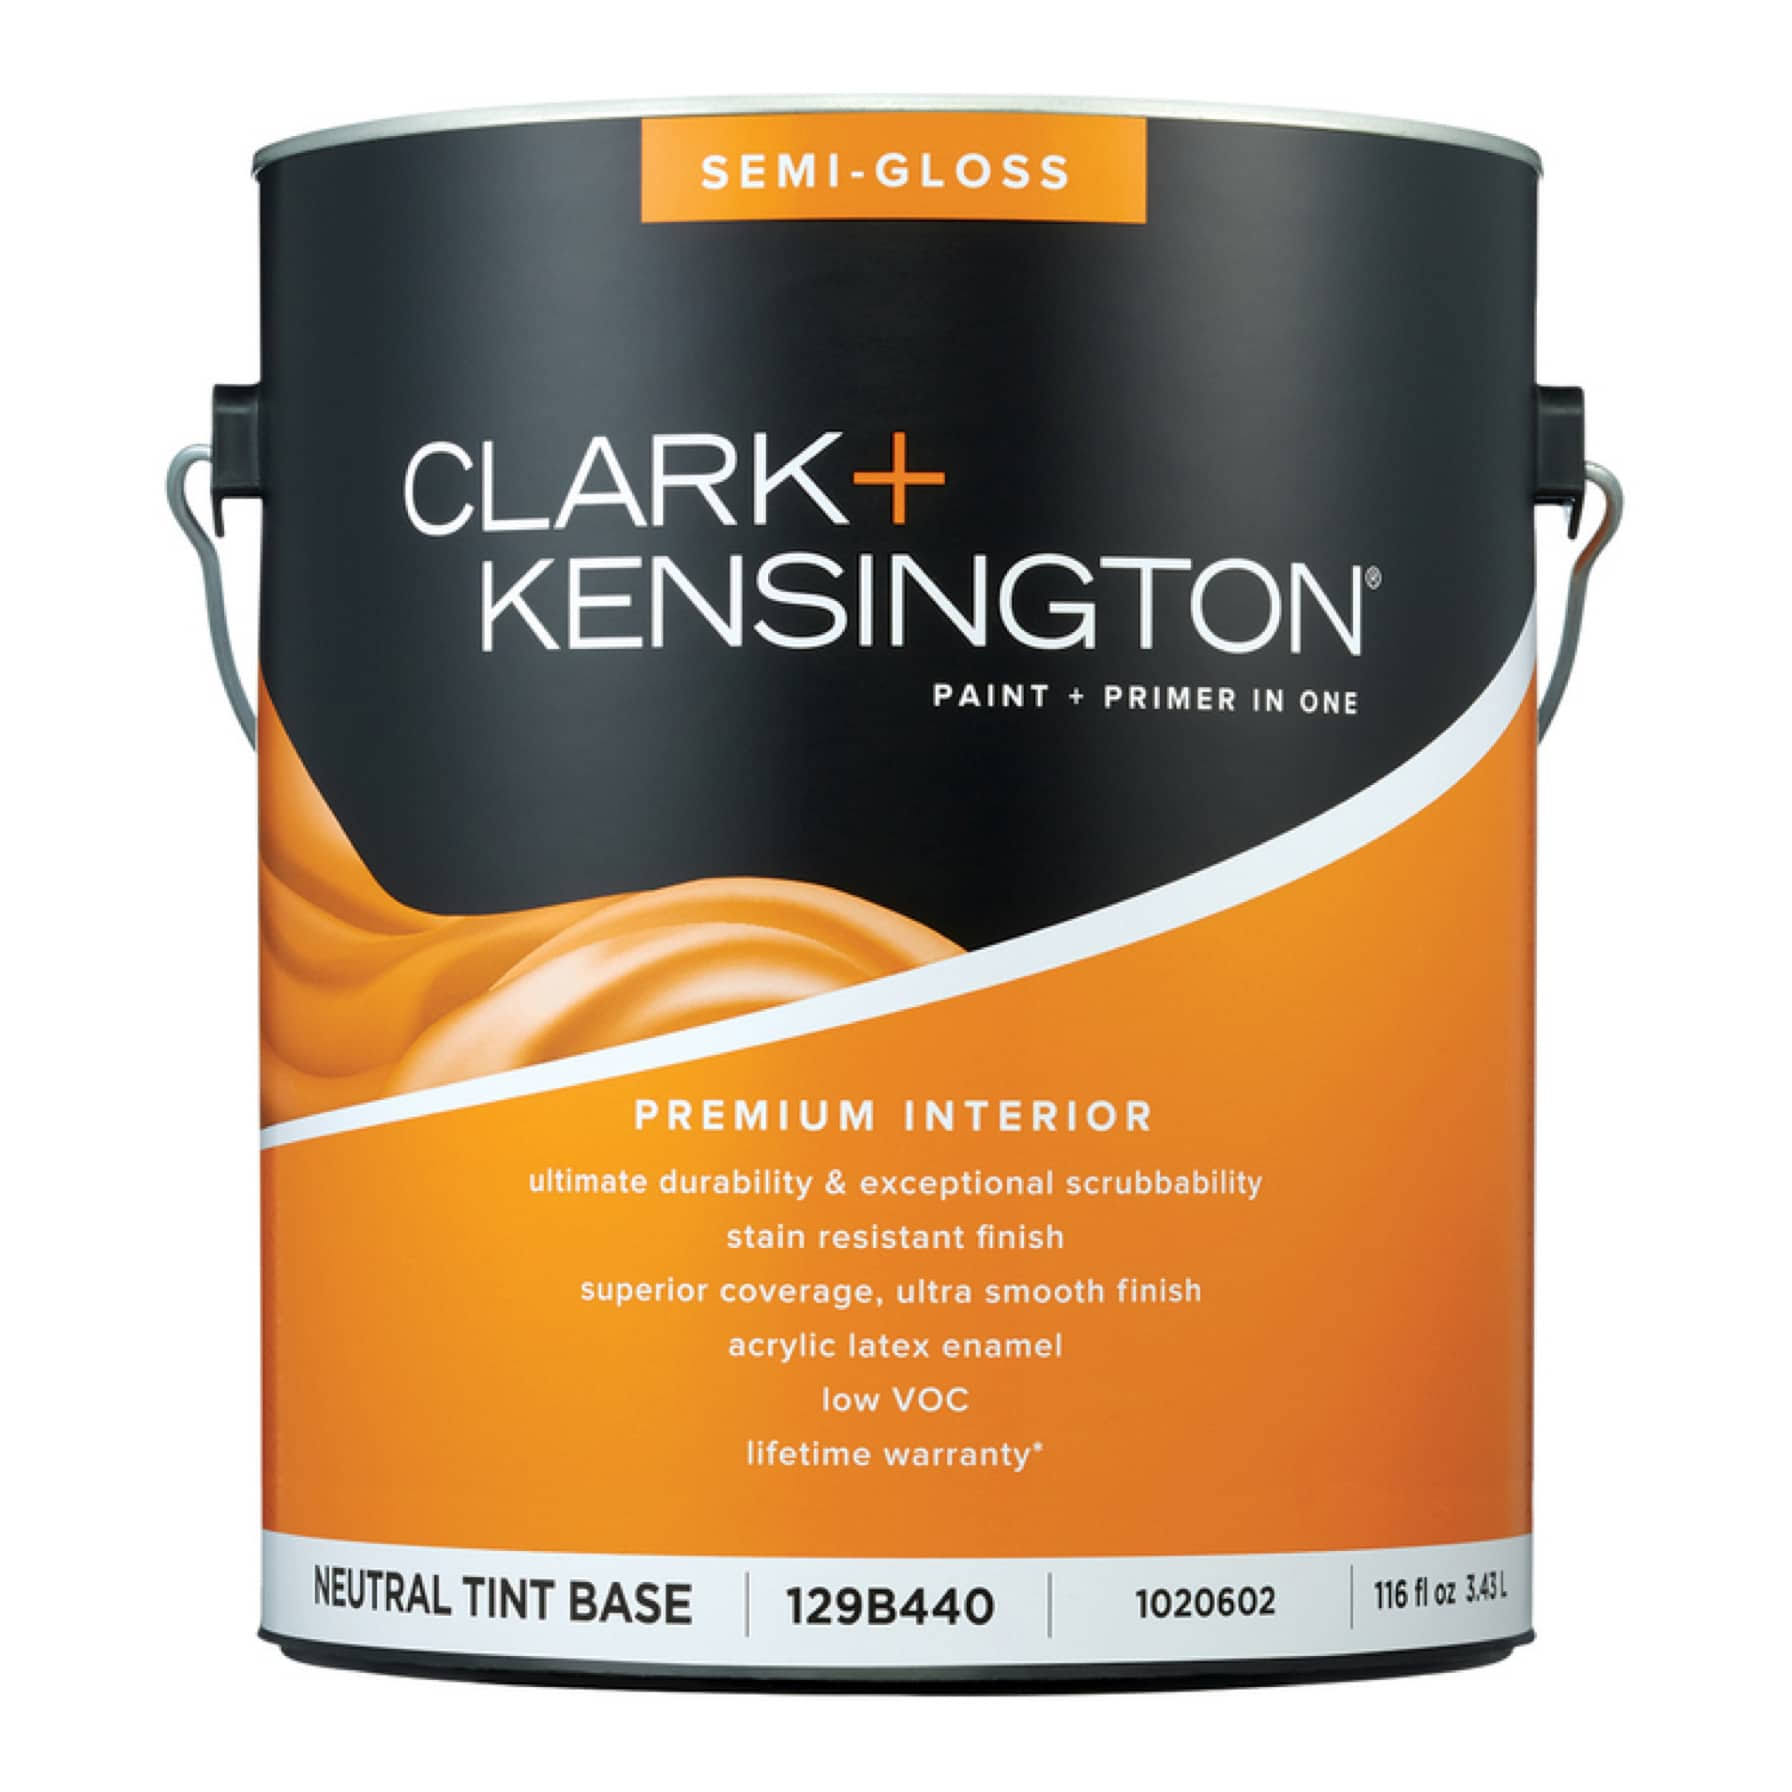 Clark+Kensington Semi-Gloss Tint Base Neutral Base Acrylic Latex Premium Paint Interior 1 Gal